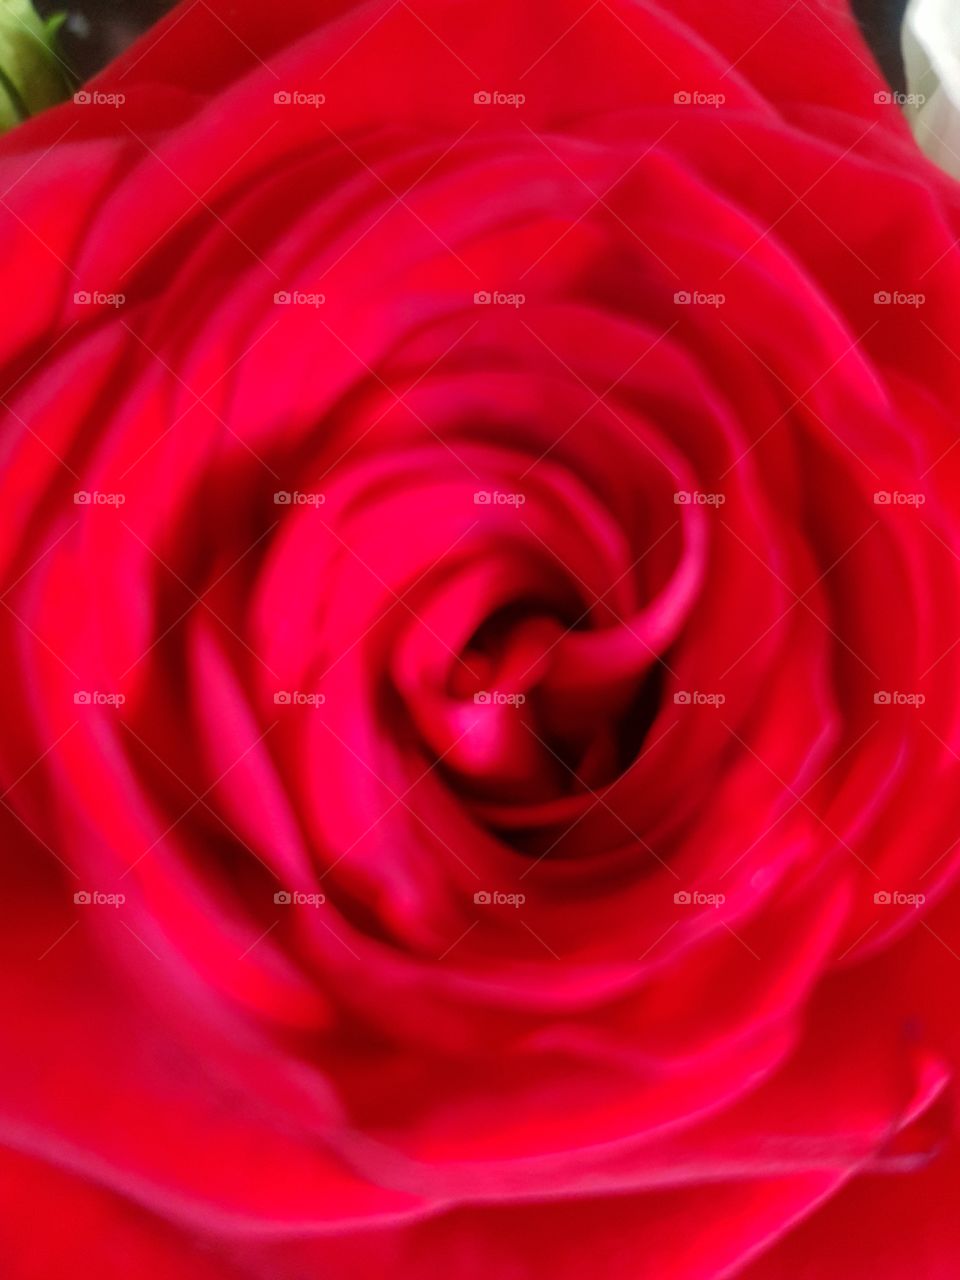 pure red rose swirl